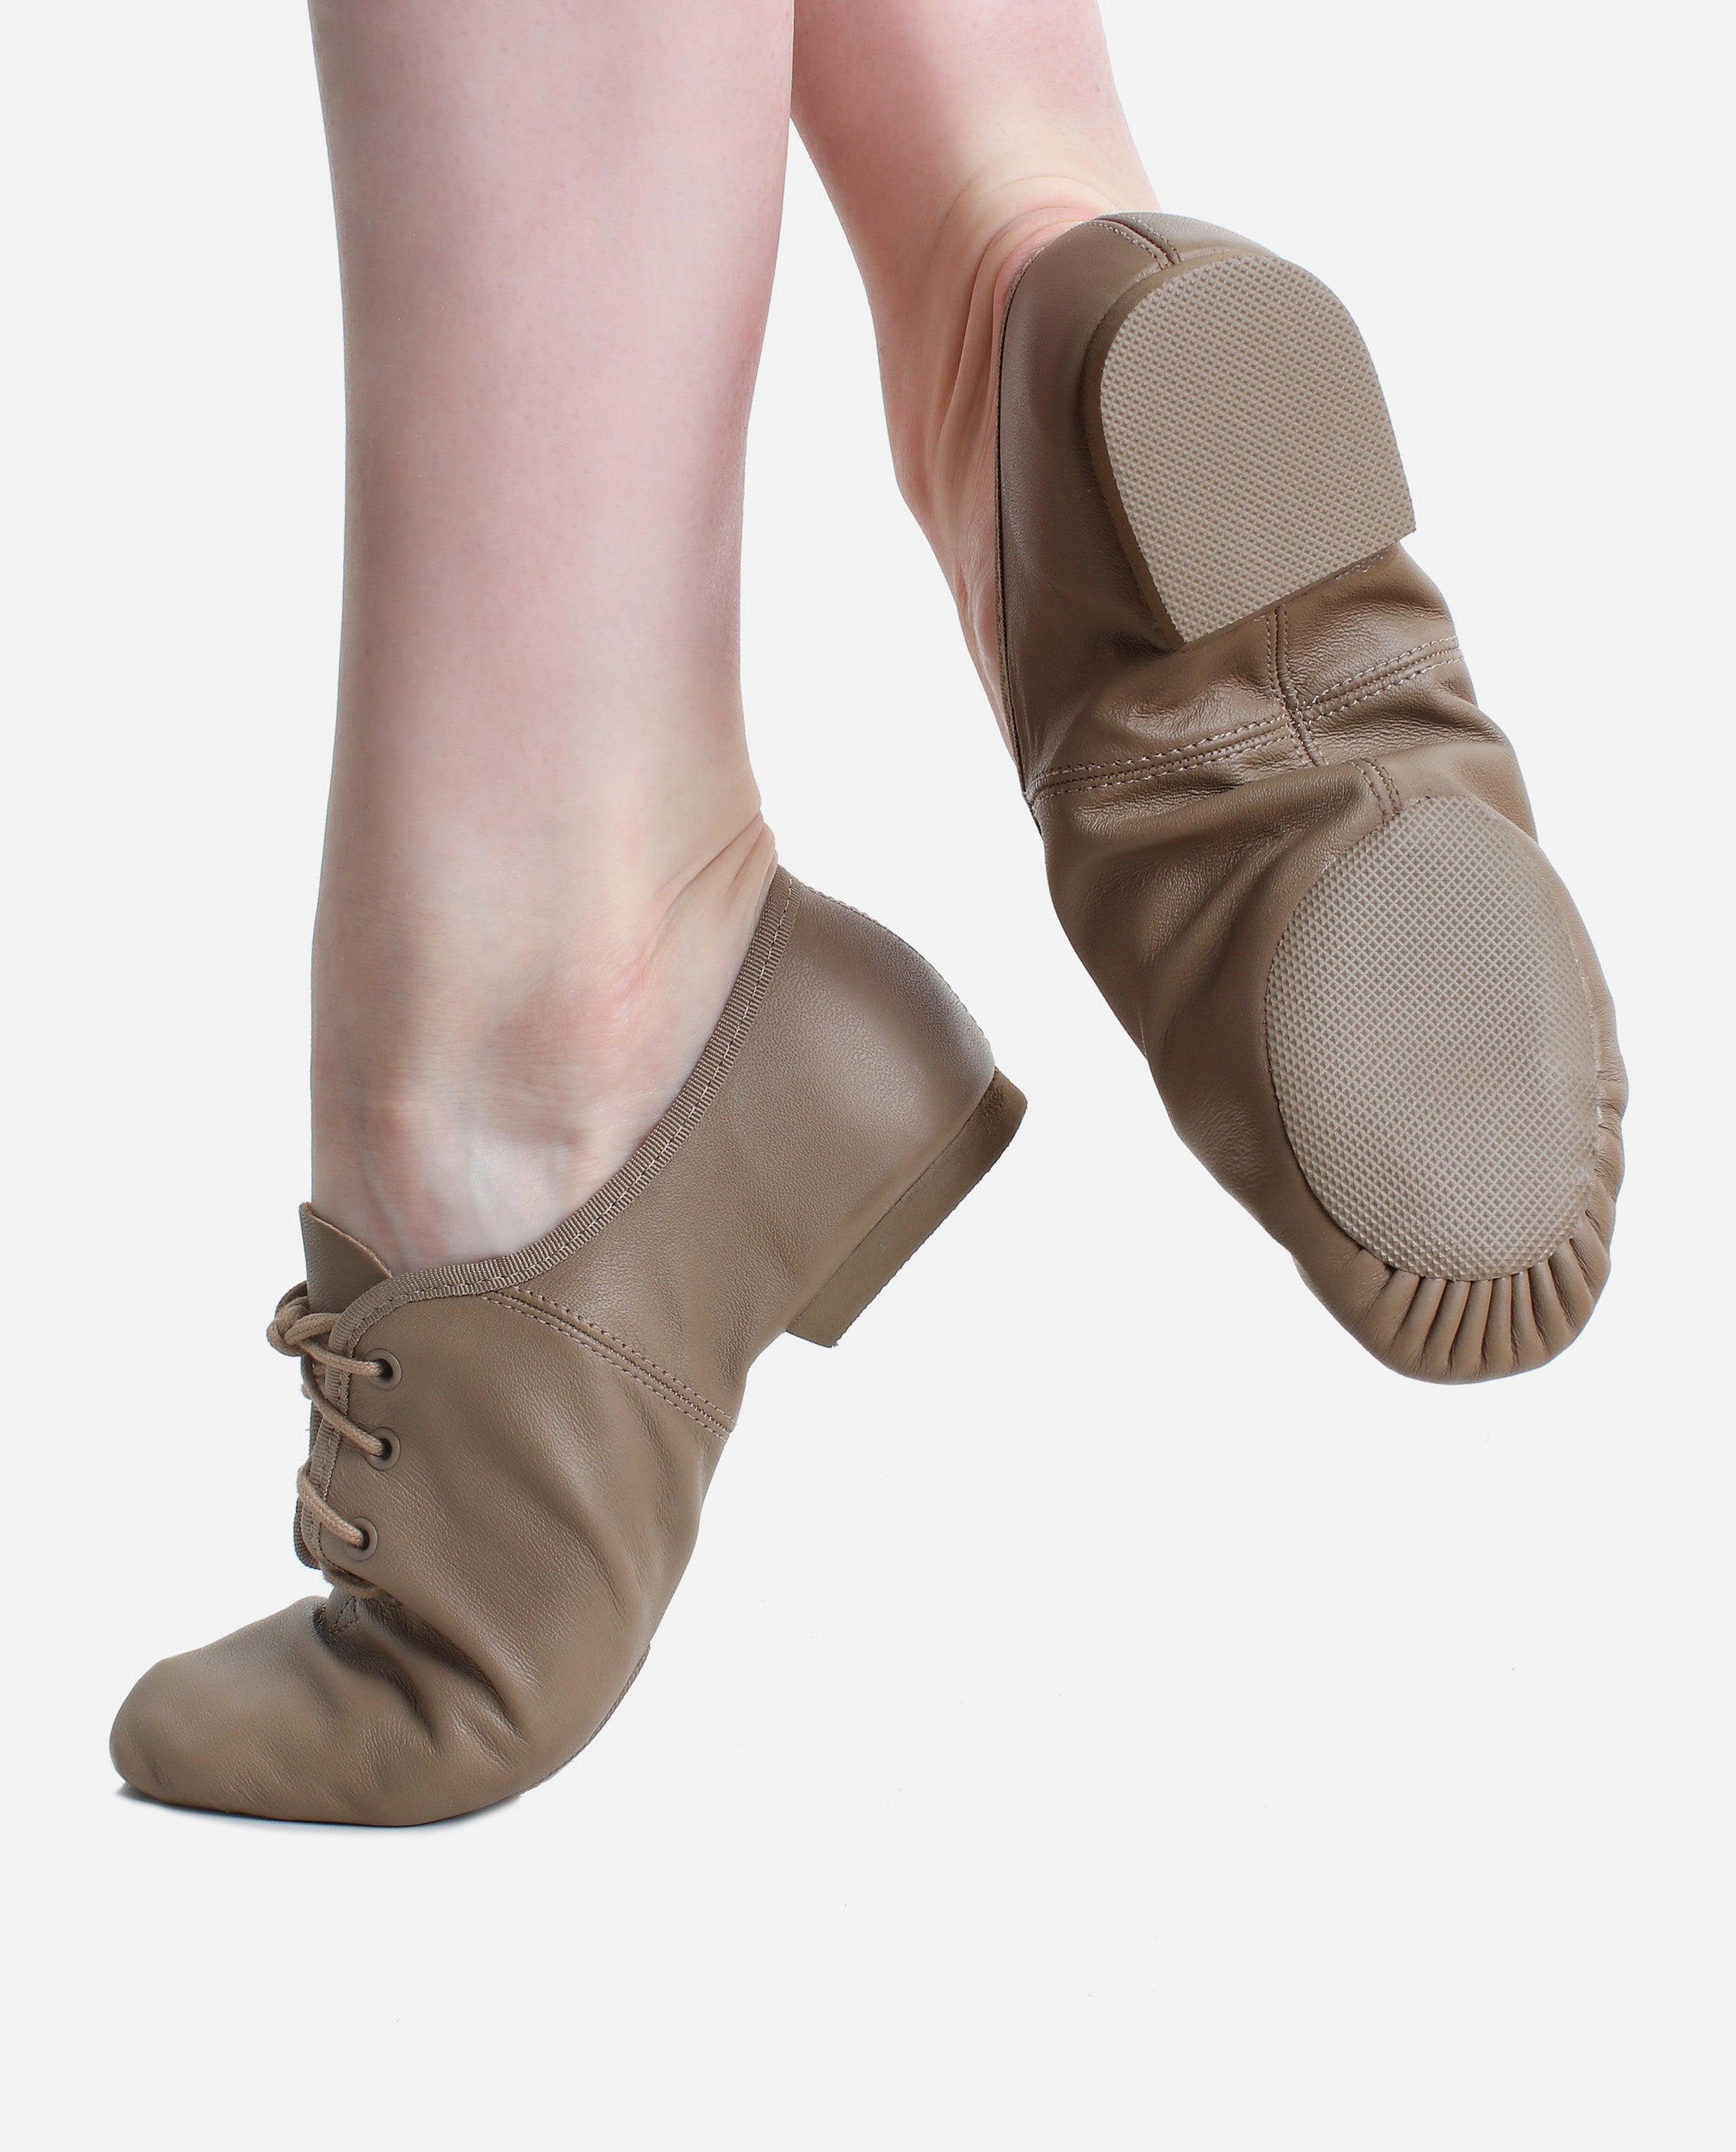 Move Dance Premium Sneaker Style Split Sole Jazz Shoe